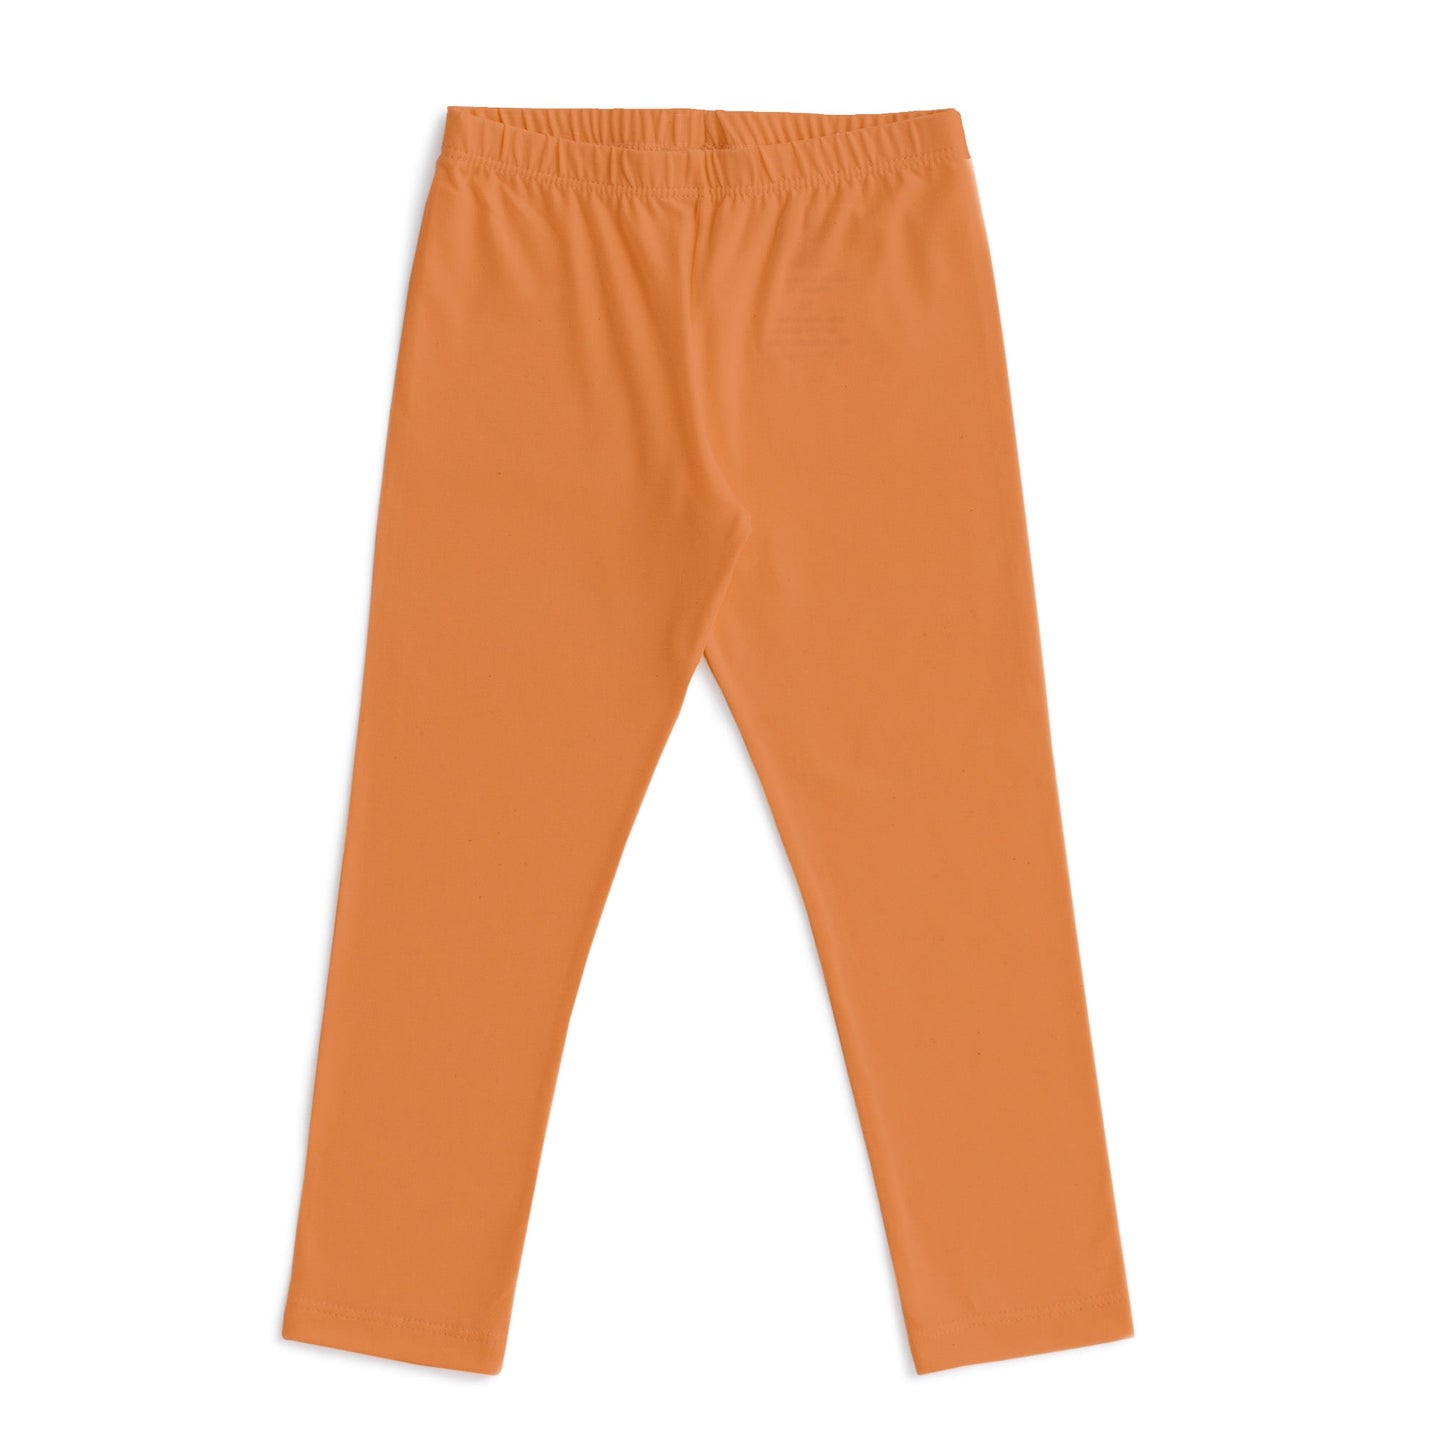 Leggings - Solid Vintage Orange